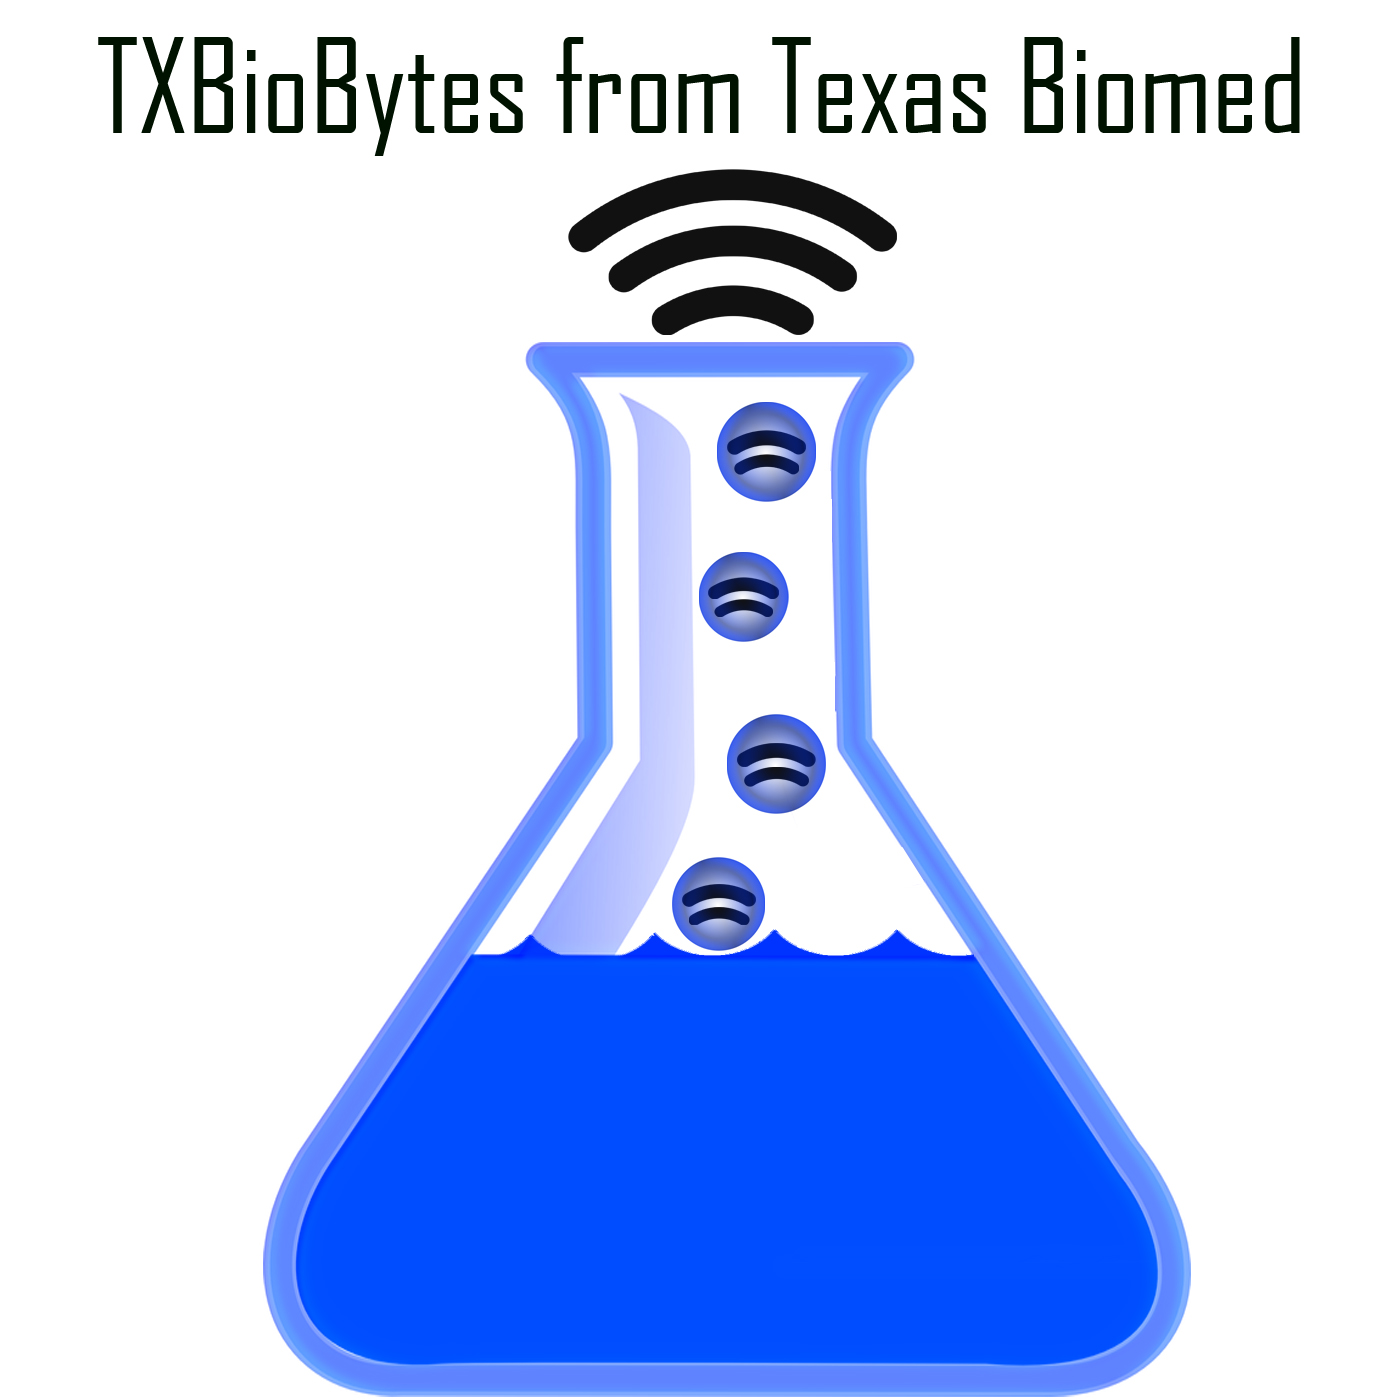 TXBiobytes from Texas Biomed